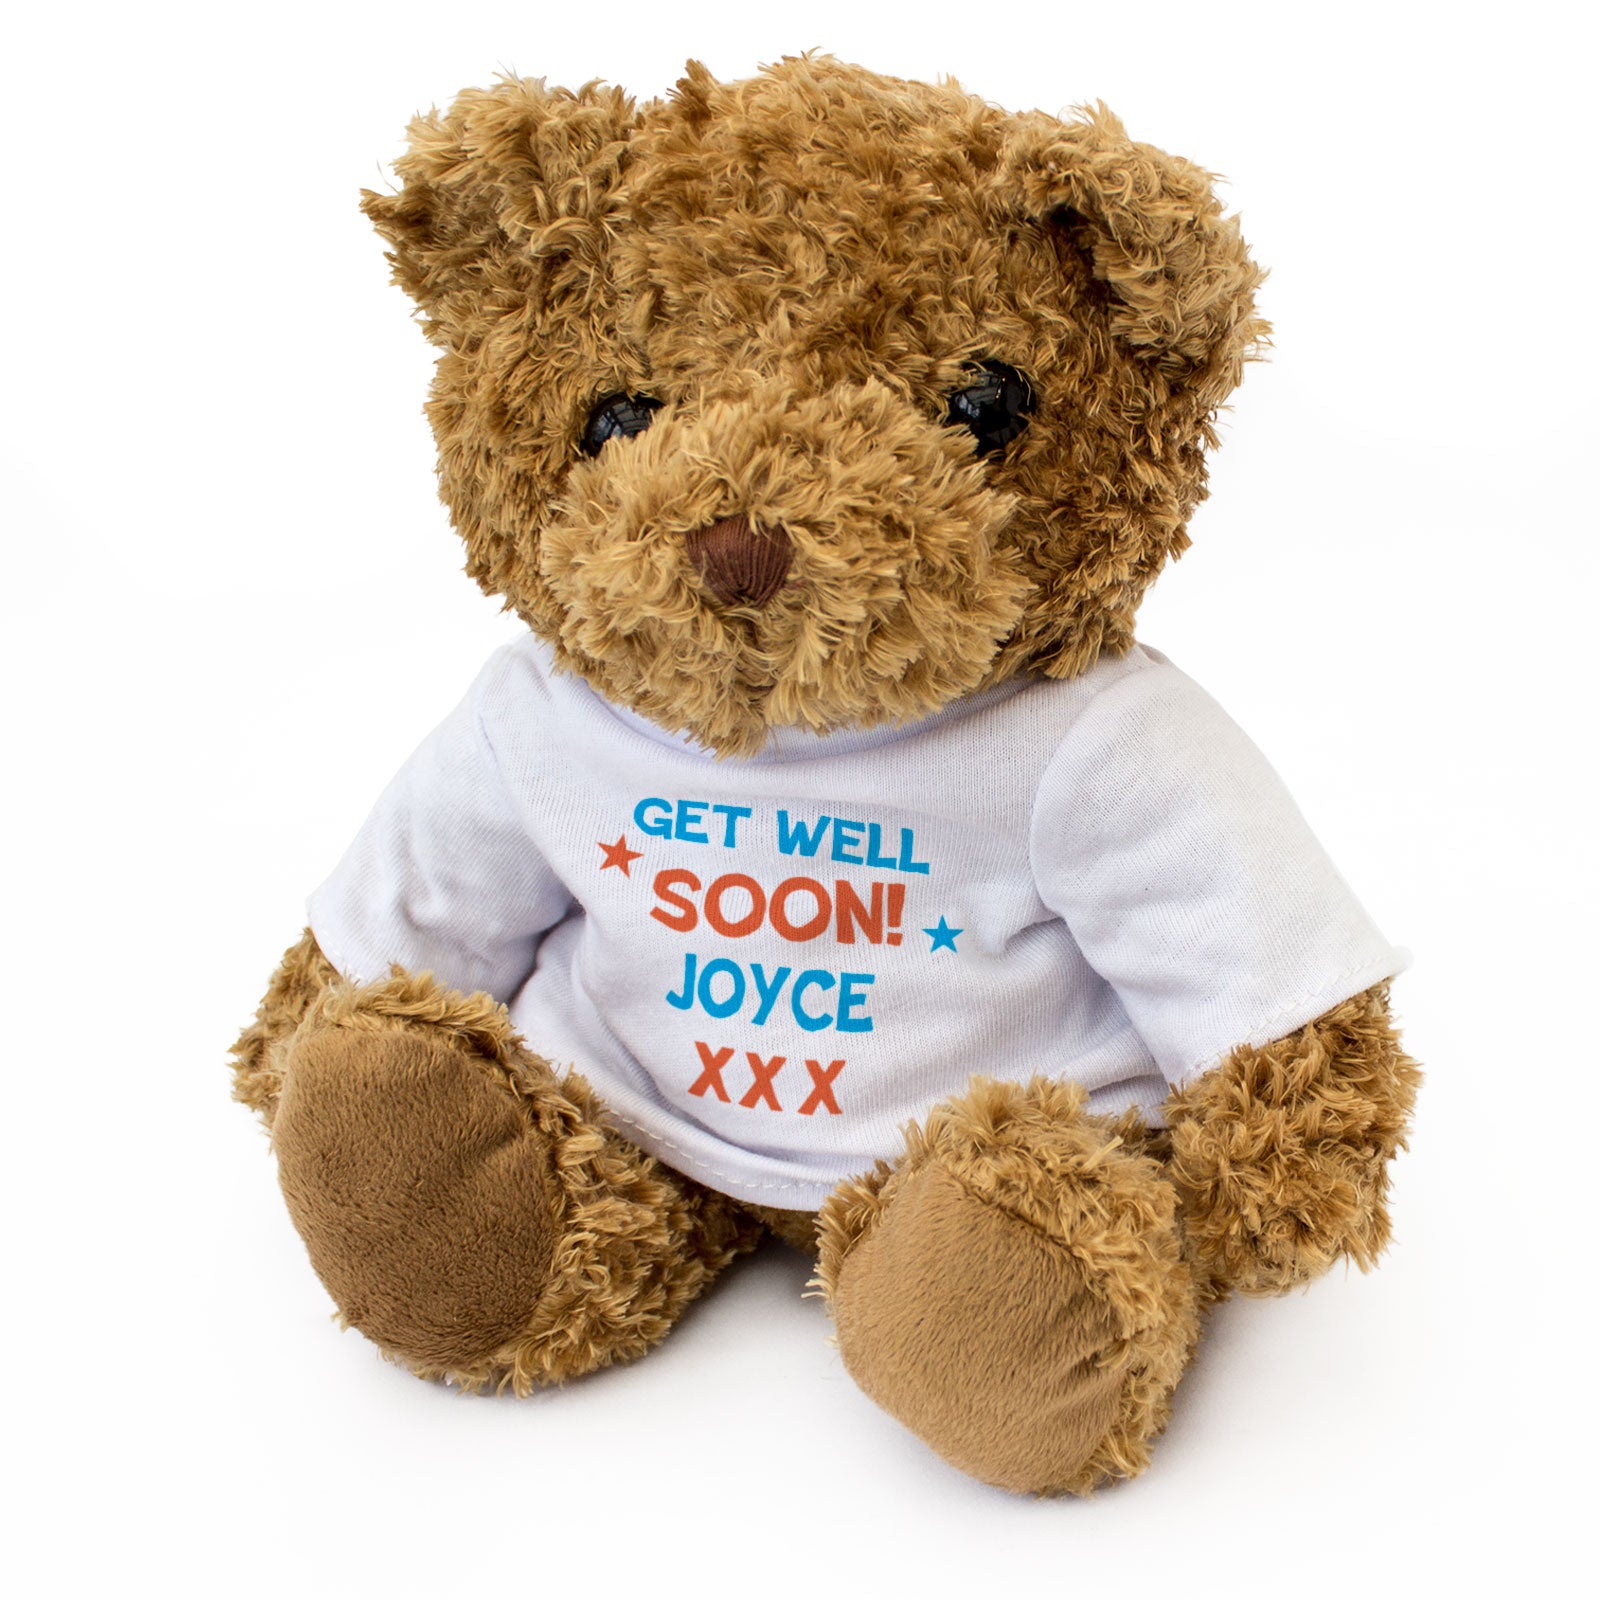 Get Well Soon Joyce - Teddy Bear